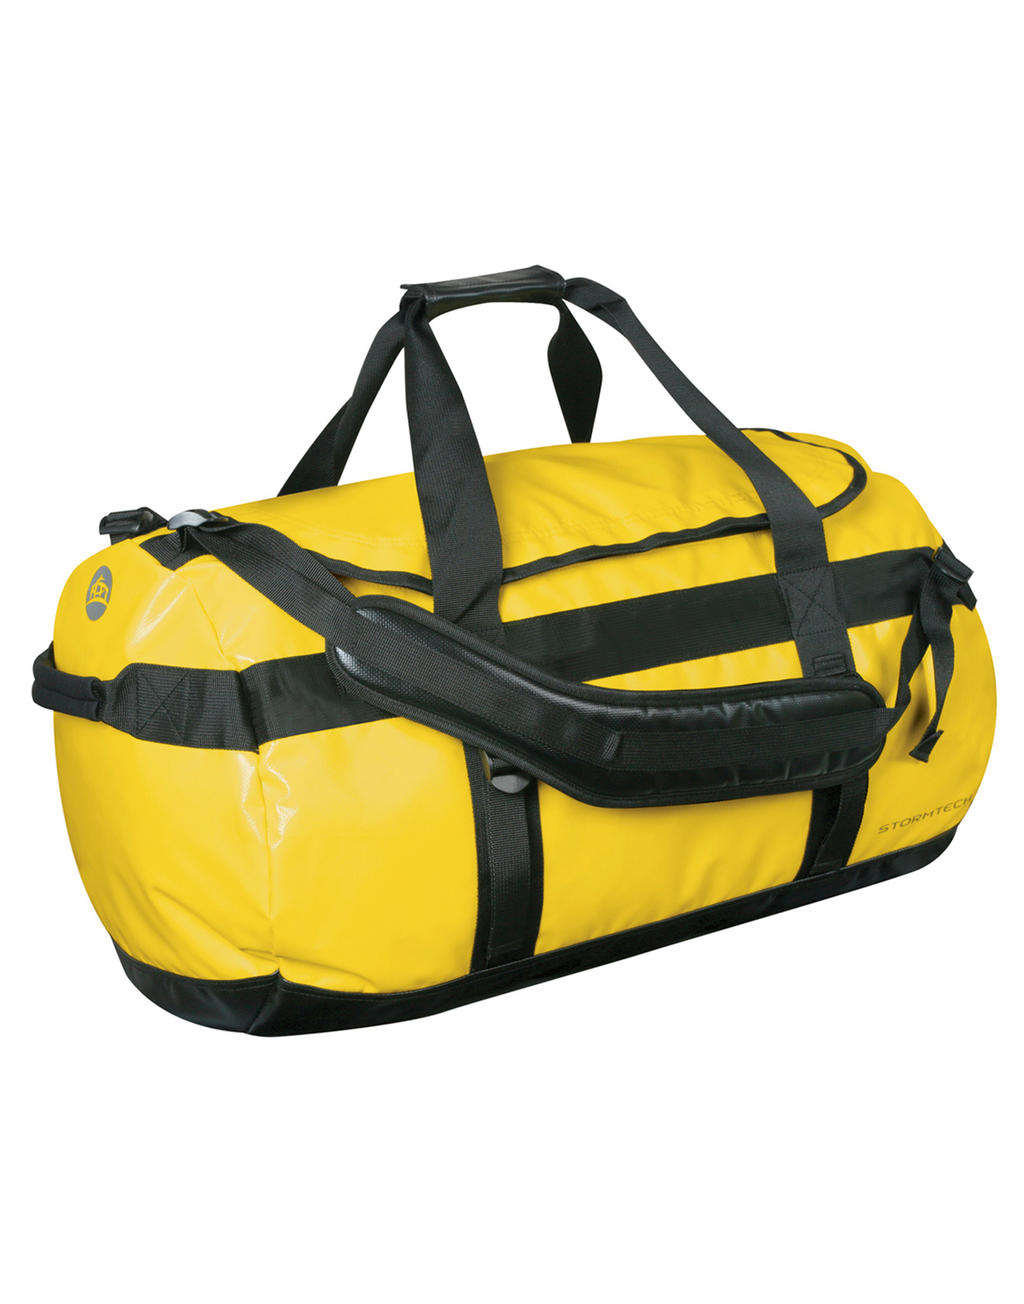  Waterproof Gear Bag in Farbe Yellow/Black